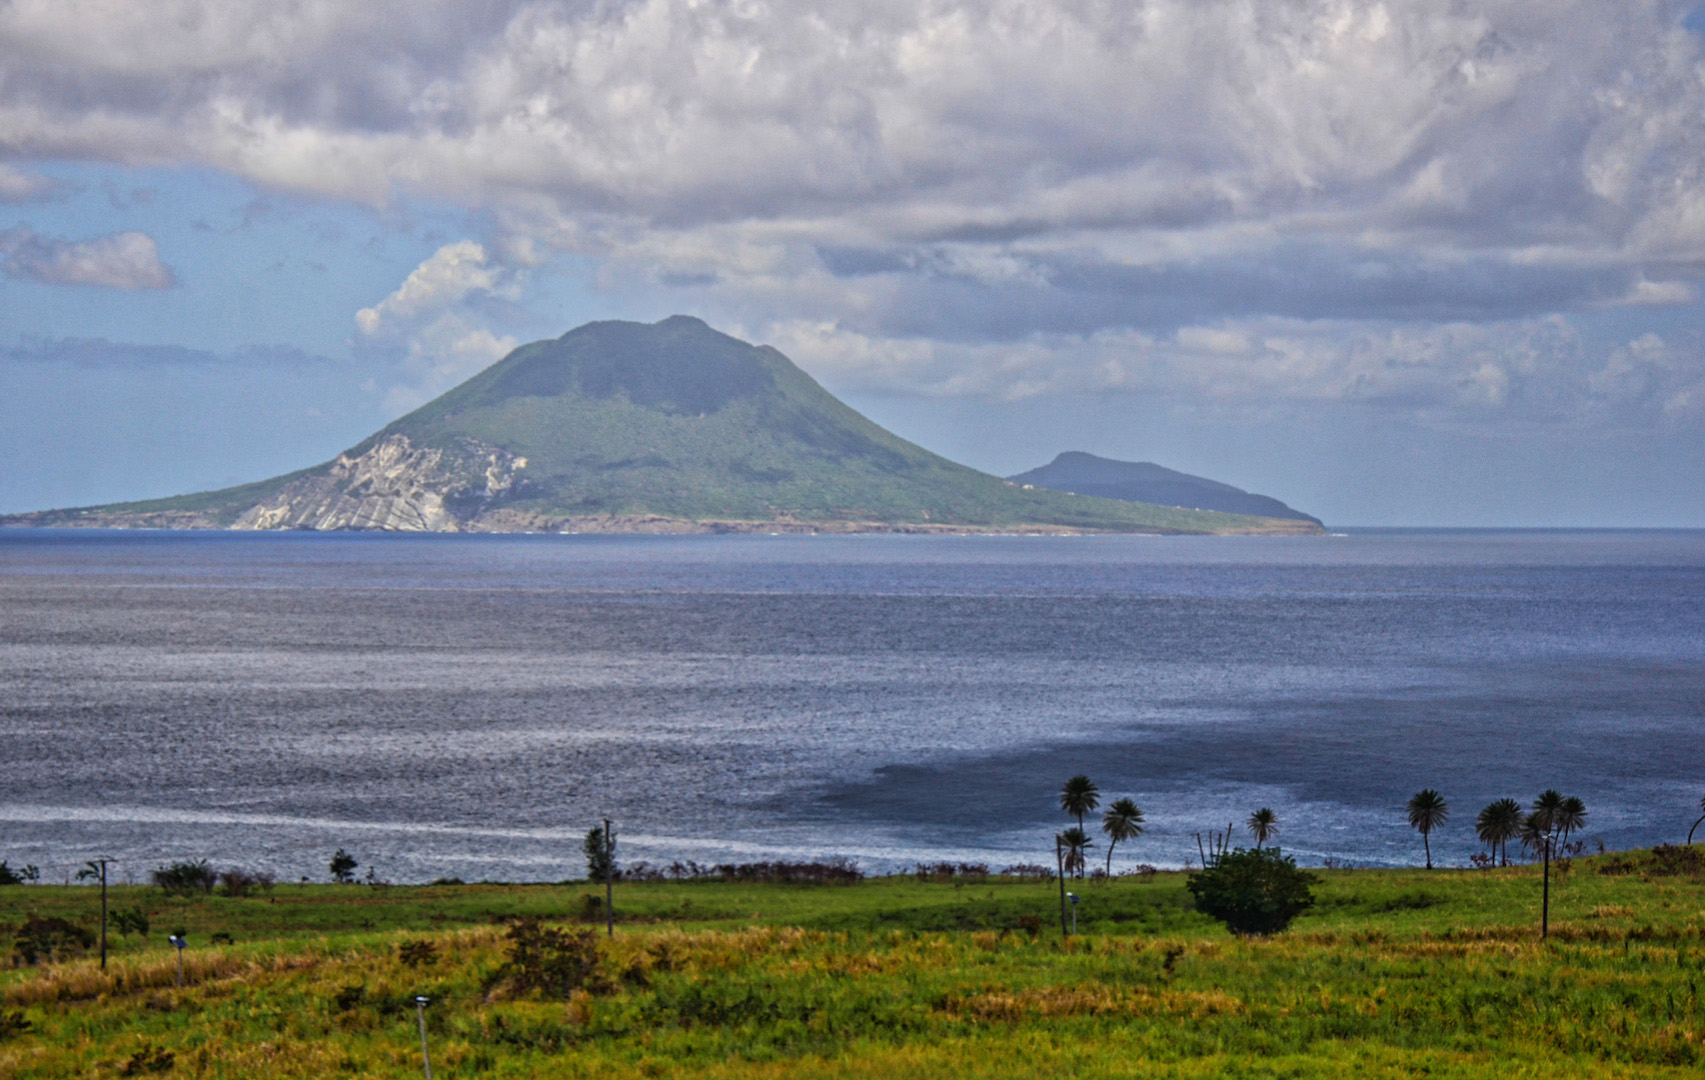 St. Eustatius and Saba Islands